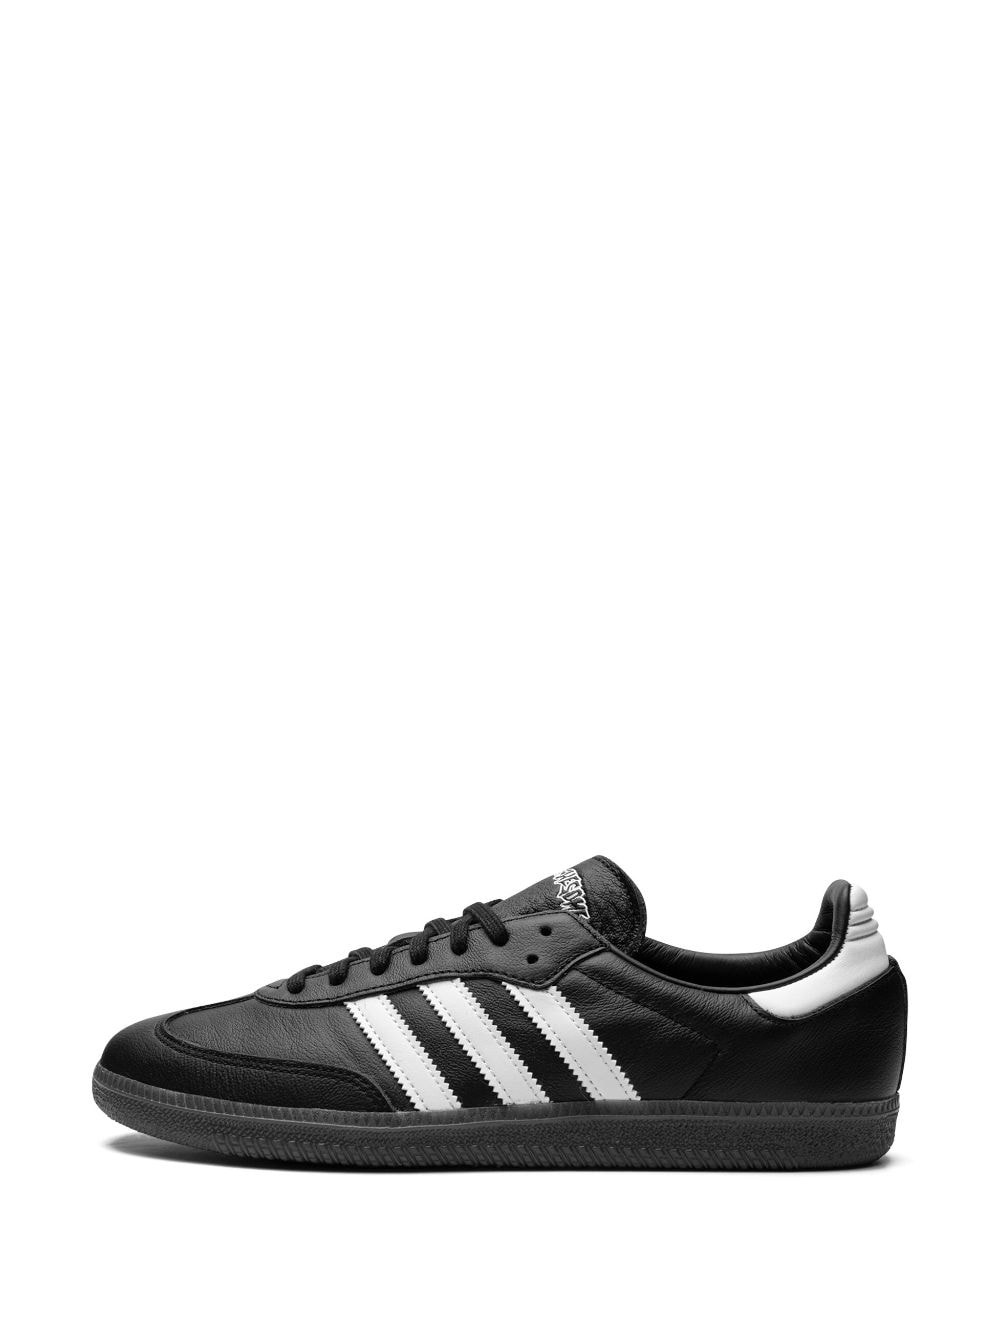 x FA Samba "Black/White" sneakers - 5